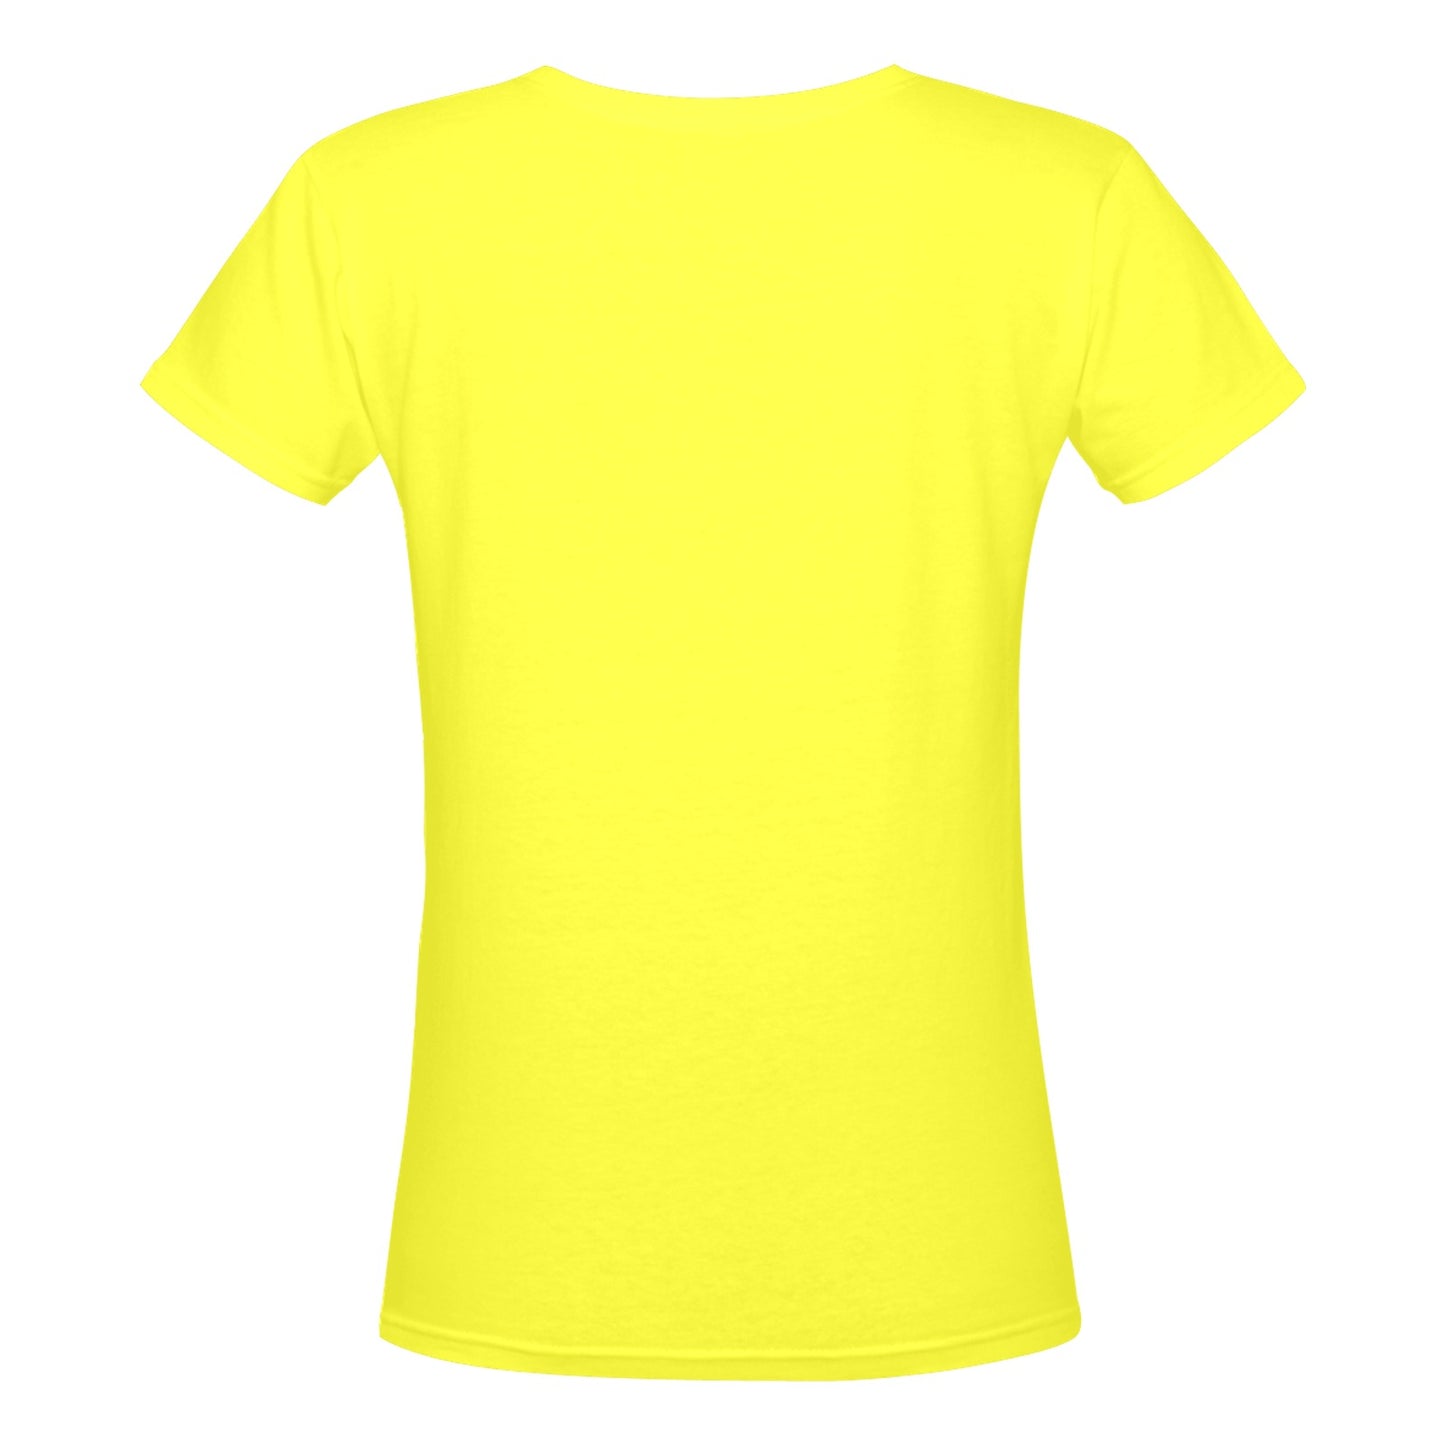 Balloon Twister Shirt Yellow